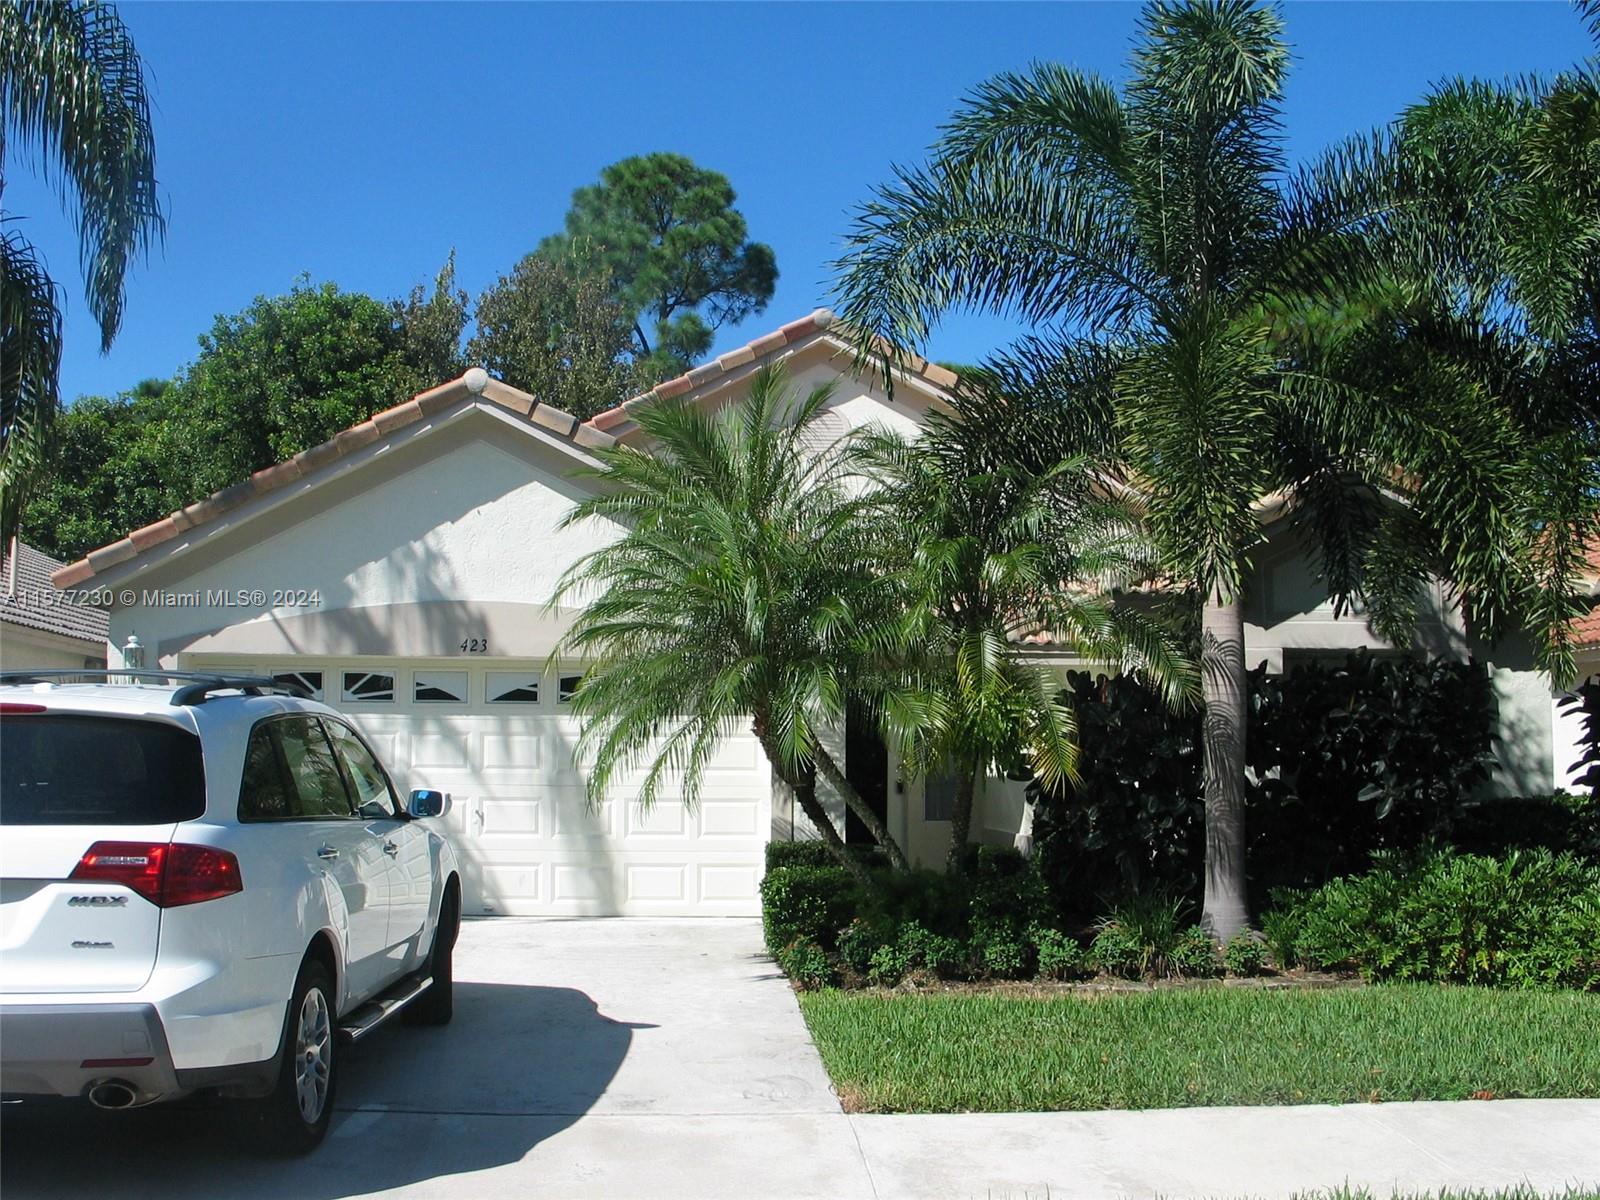 Rental Property at 423 Woodview Cir, Palm Beach Gardens, Palm Beach County, Florida - Bedrooms: 3 
Bathrooms: 2  - $3,600 MO.